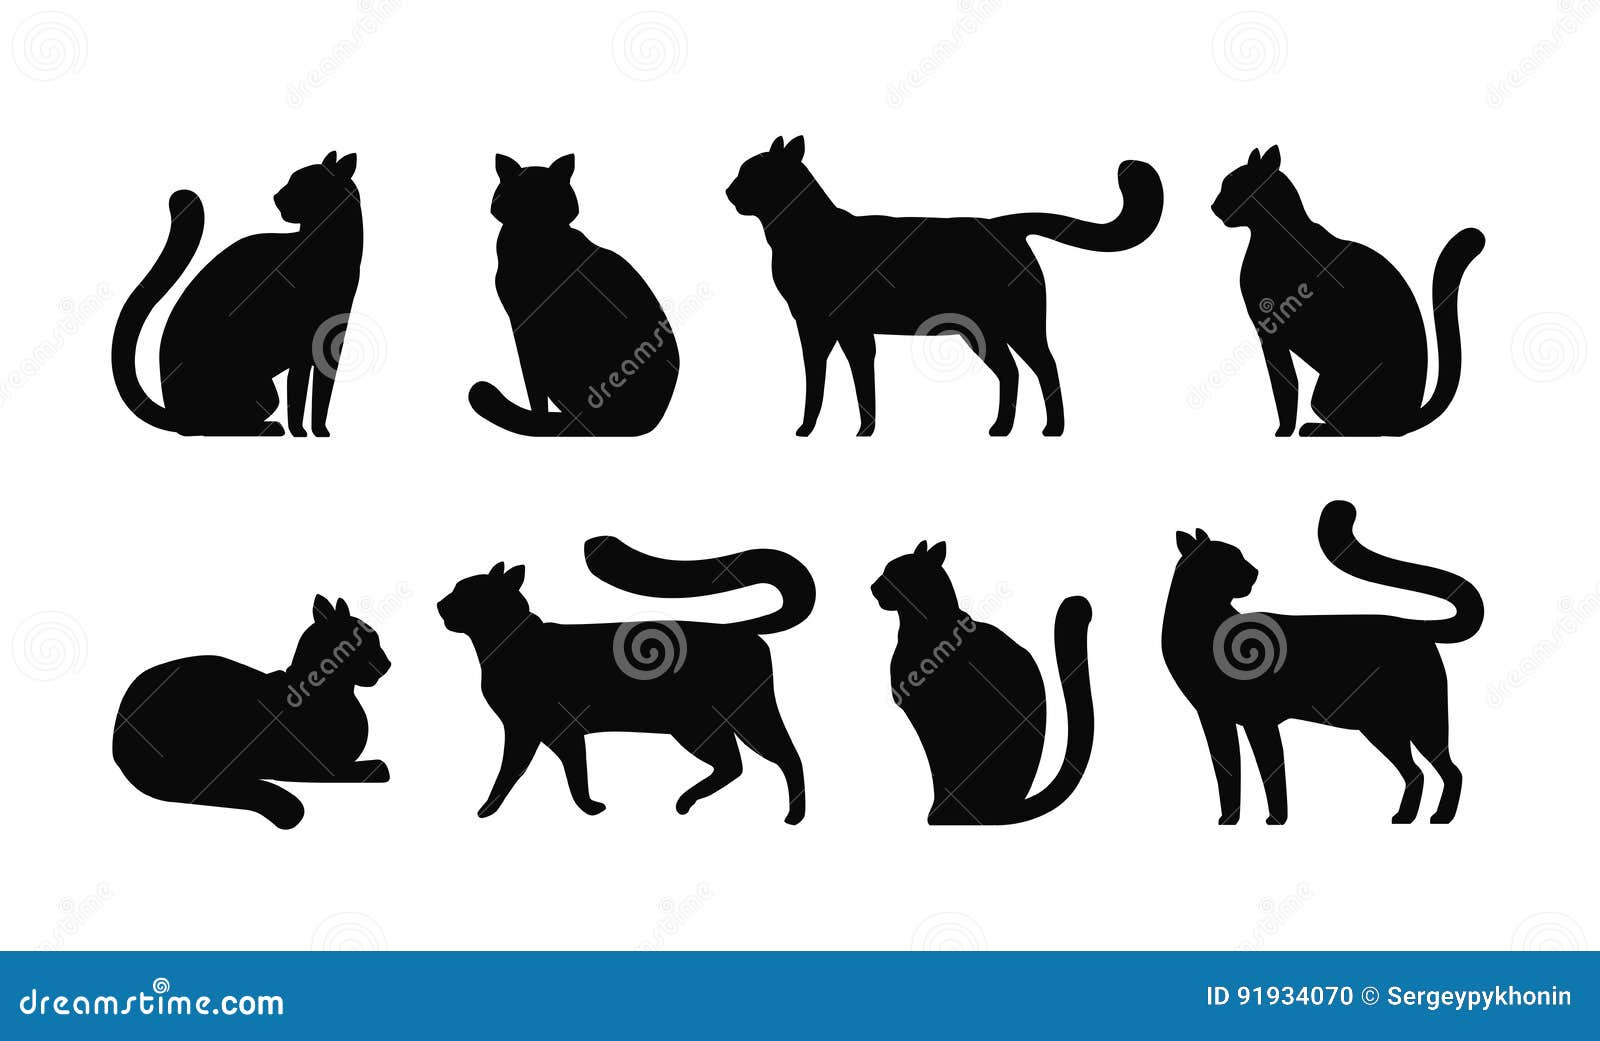 cat silhouette, set icons. pets, kitty, feline, animals .  